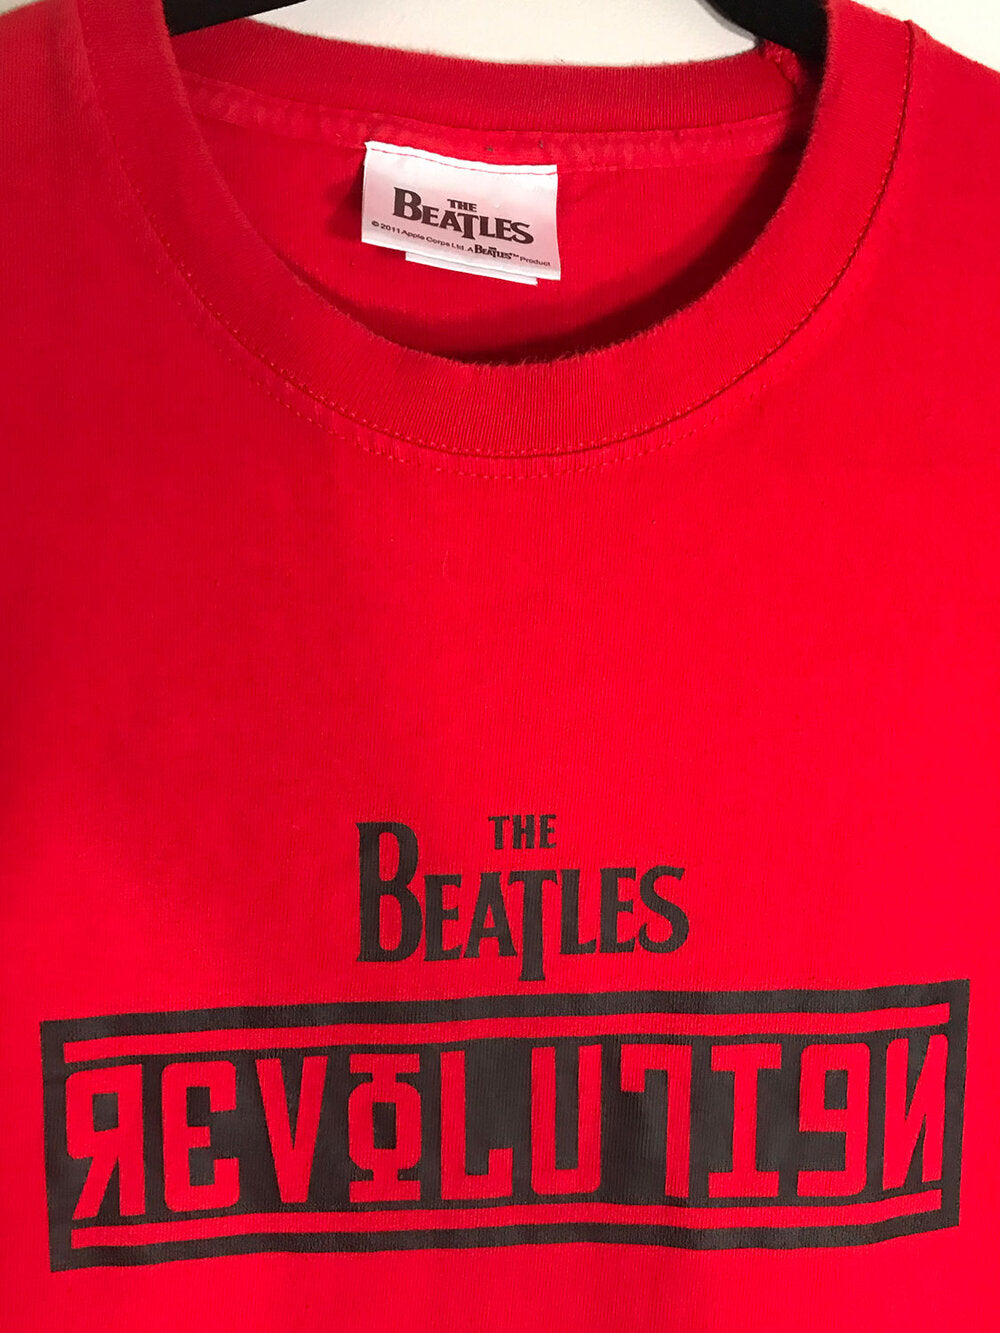 THE BEATLES - "Revolution"